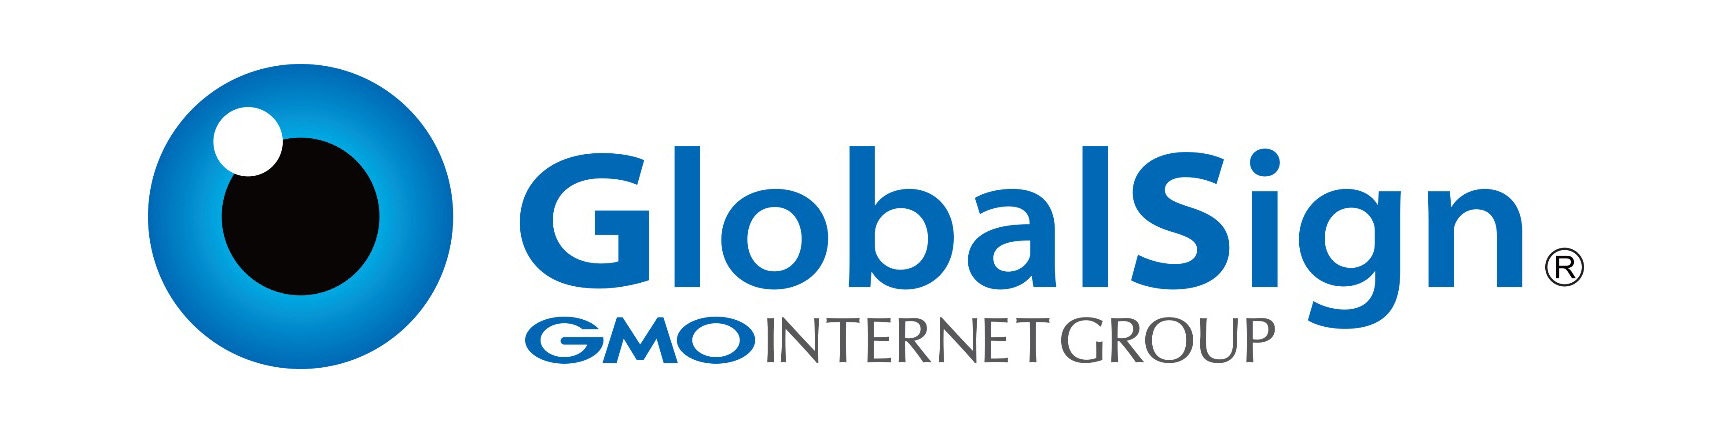 Logo Global Sign - GMO Internet Group